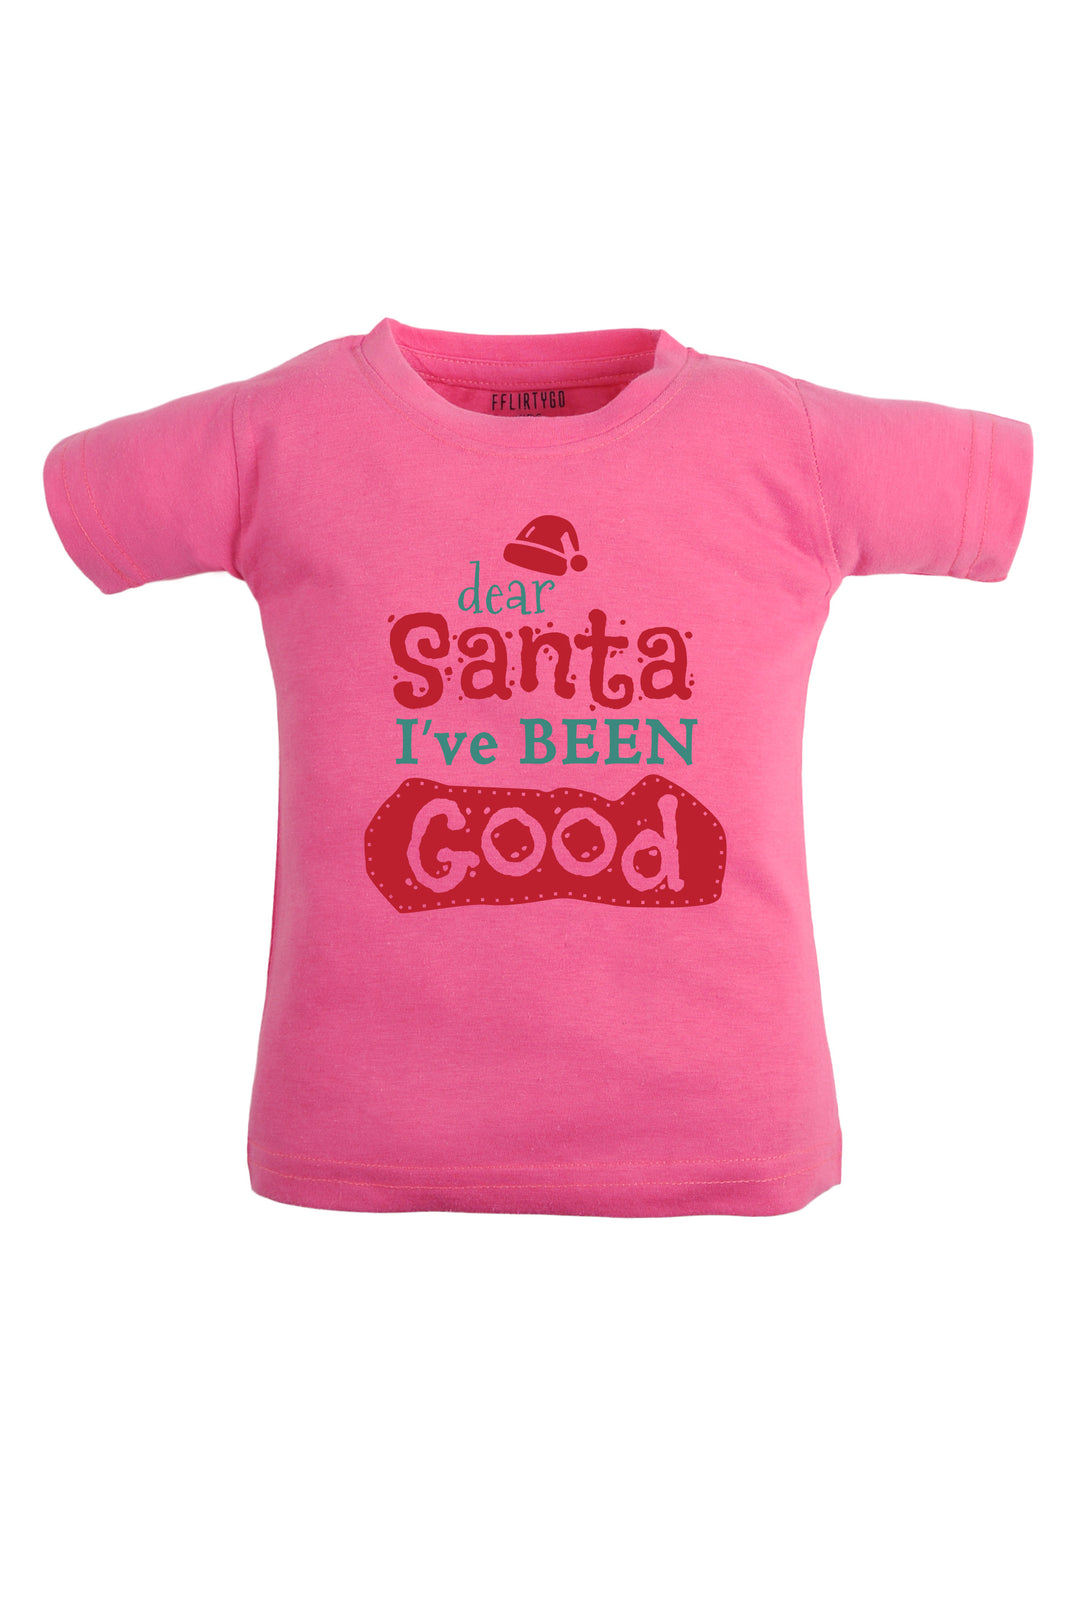 Dear Santa I've Been Good Kids T Shirt